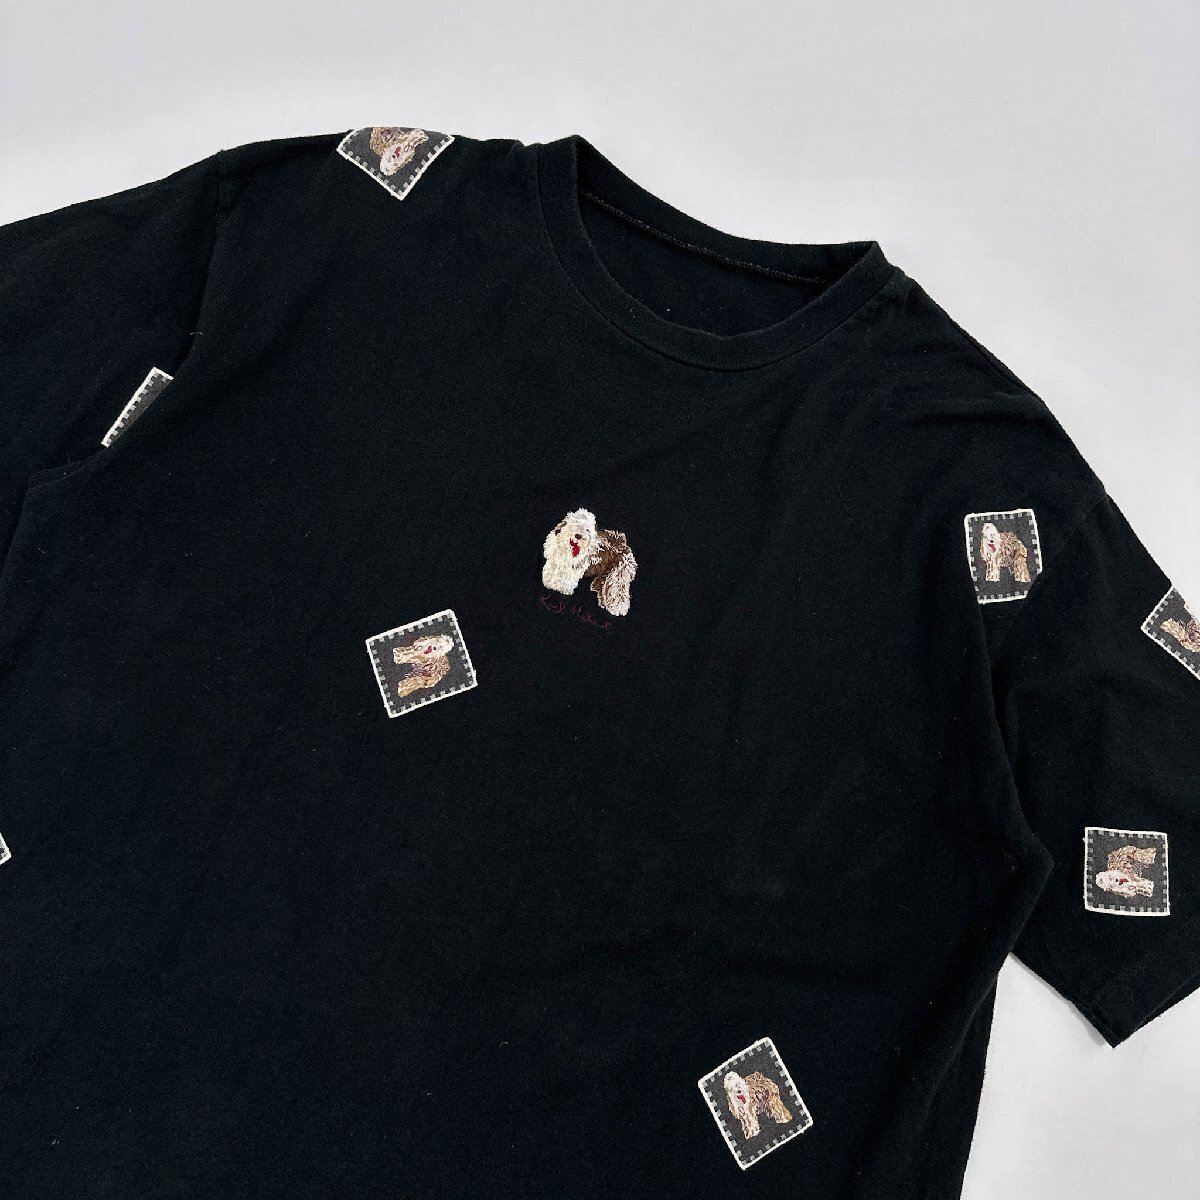 Karl Helmut Karl hell m total pattern dog design short sleeves T-shirt cut and sewn M size / black black / men's Pink House made in Japan 